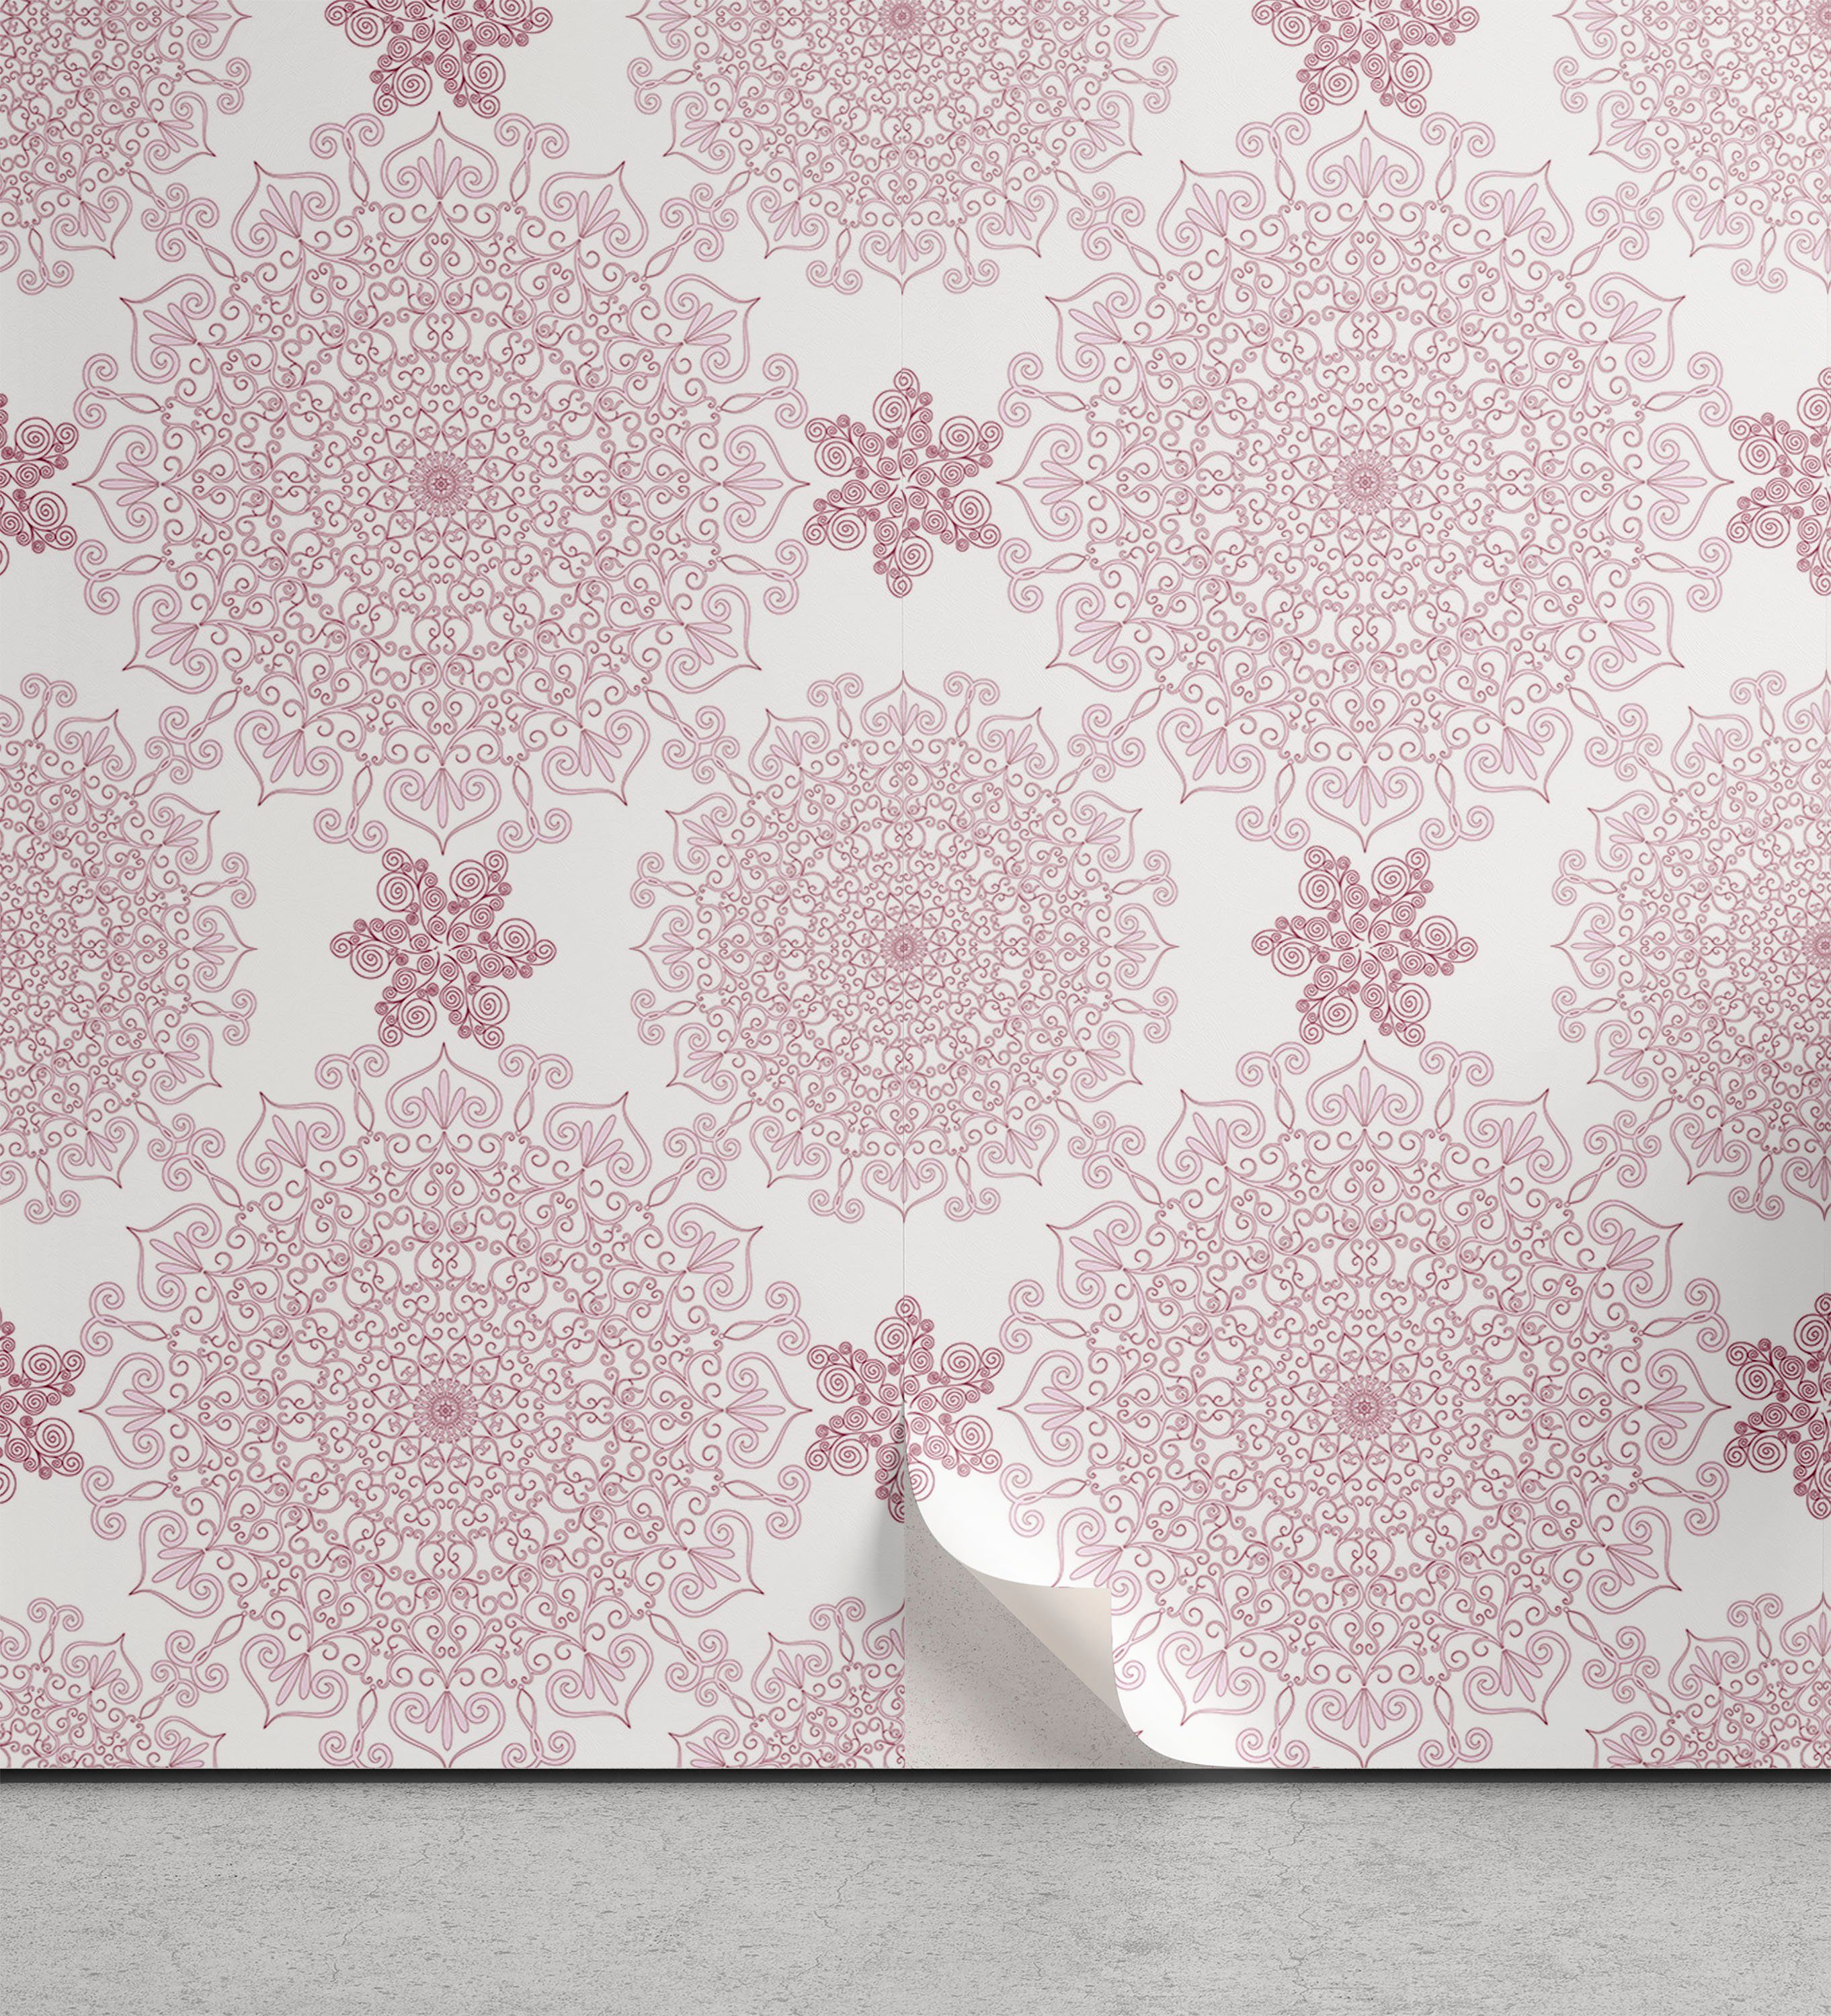 Abakuhaus Vinyltapete selbstklebendes Wohnzimmer Küchenakzent, lila Mandala viktorianischer Damast